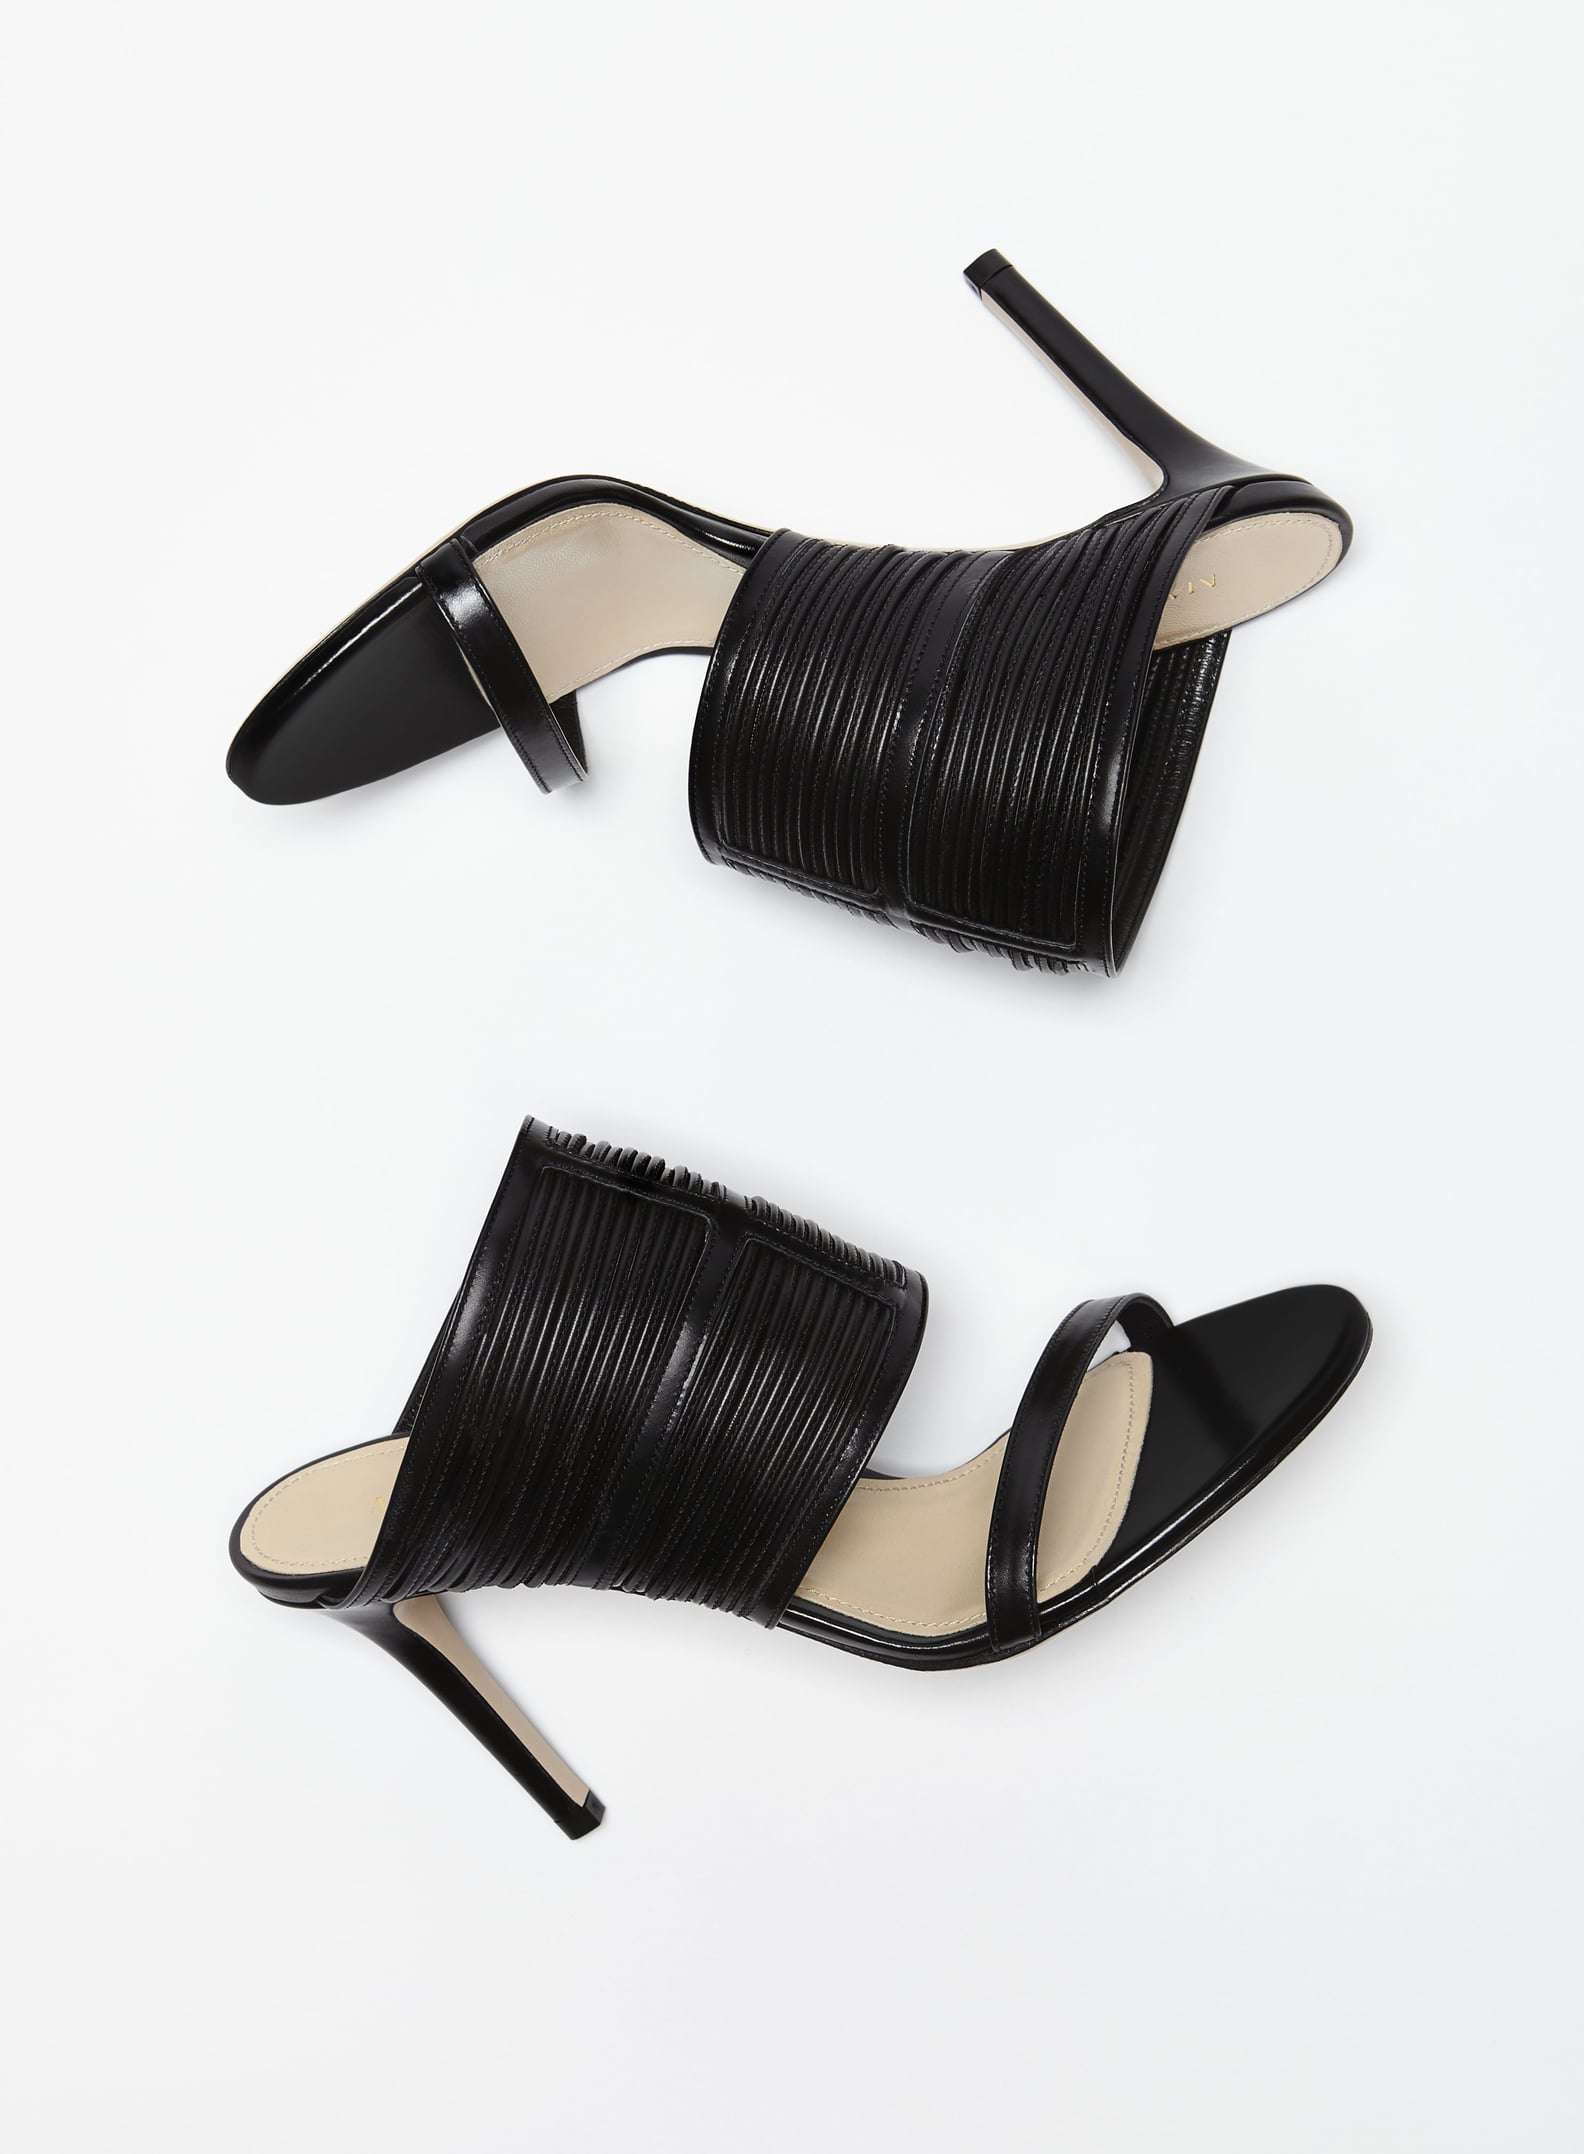 Marion Parke's Wearable Heels | POPSUGAR Fashion